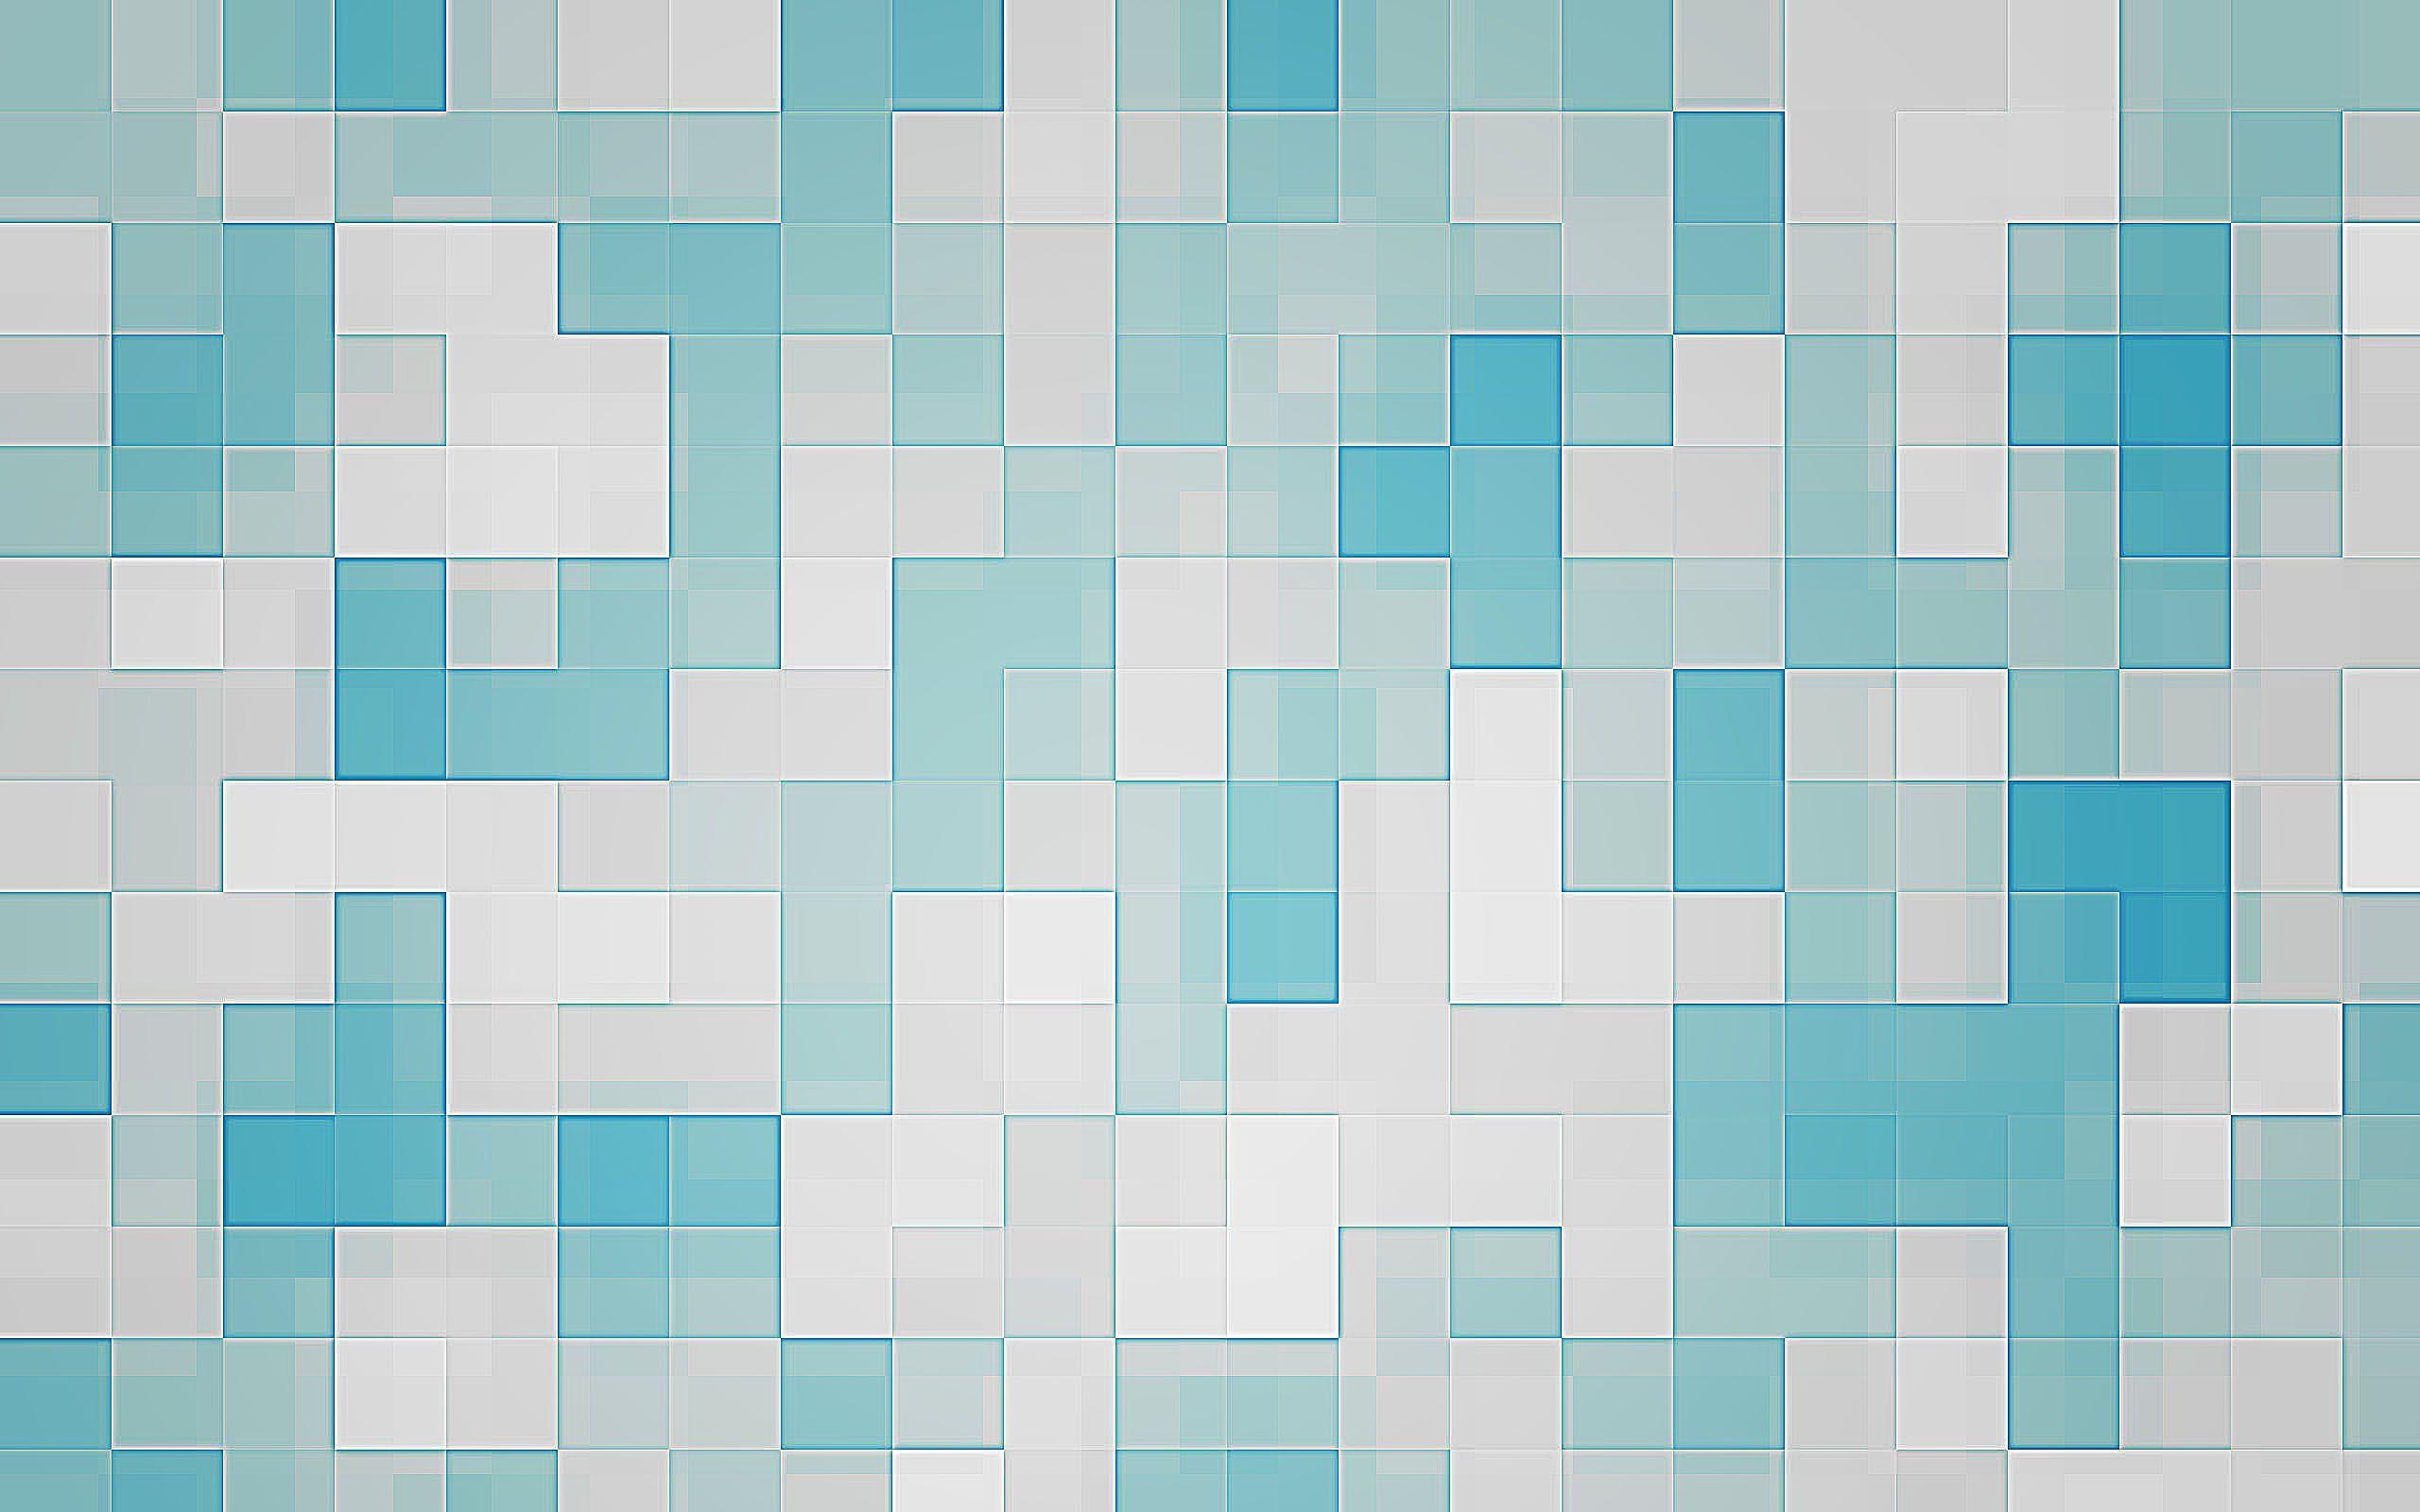 Abstract Cubes Grid Mosaic